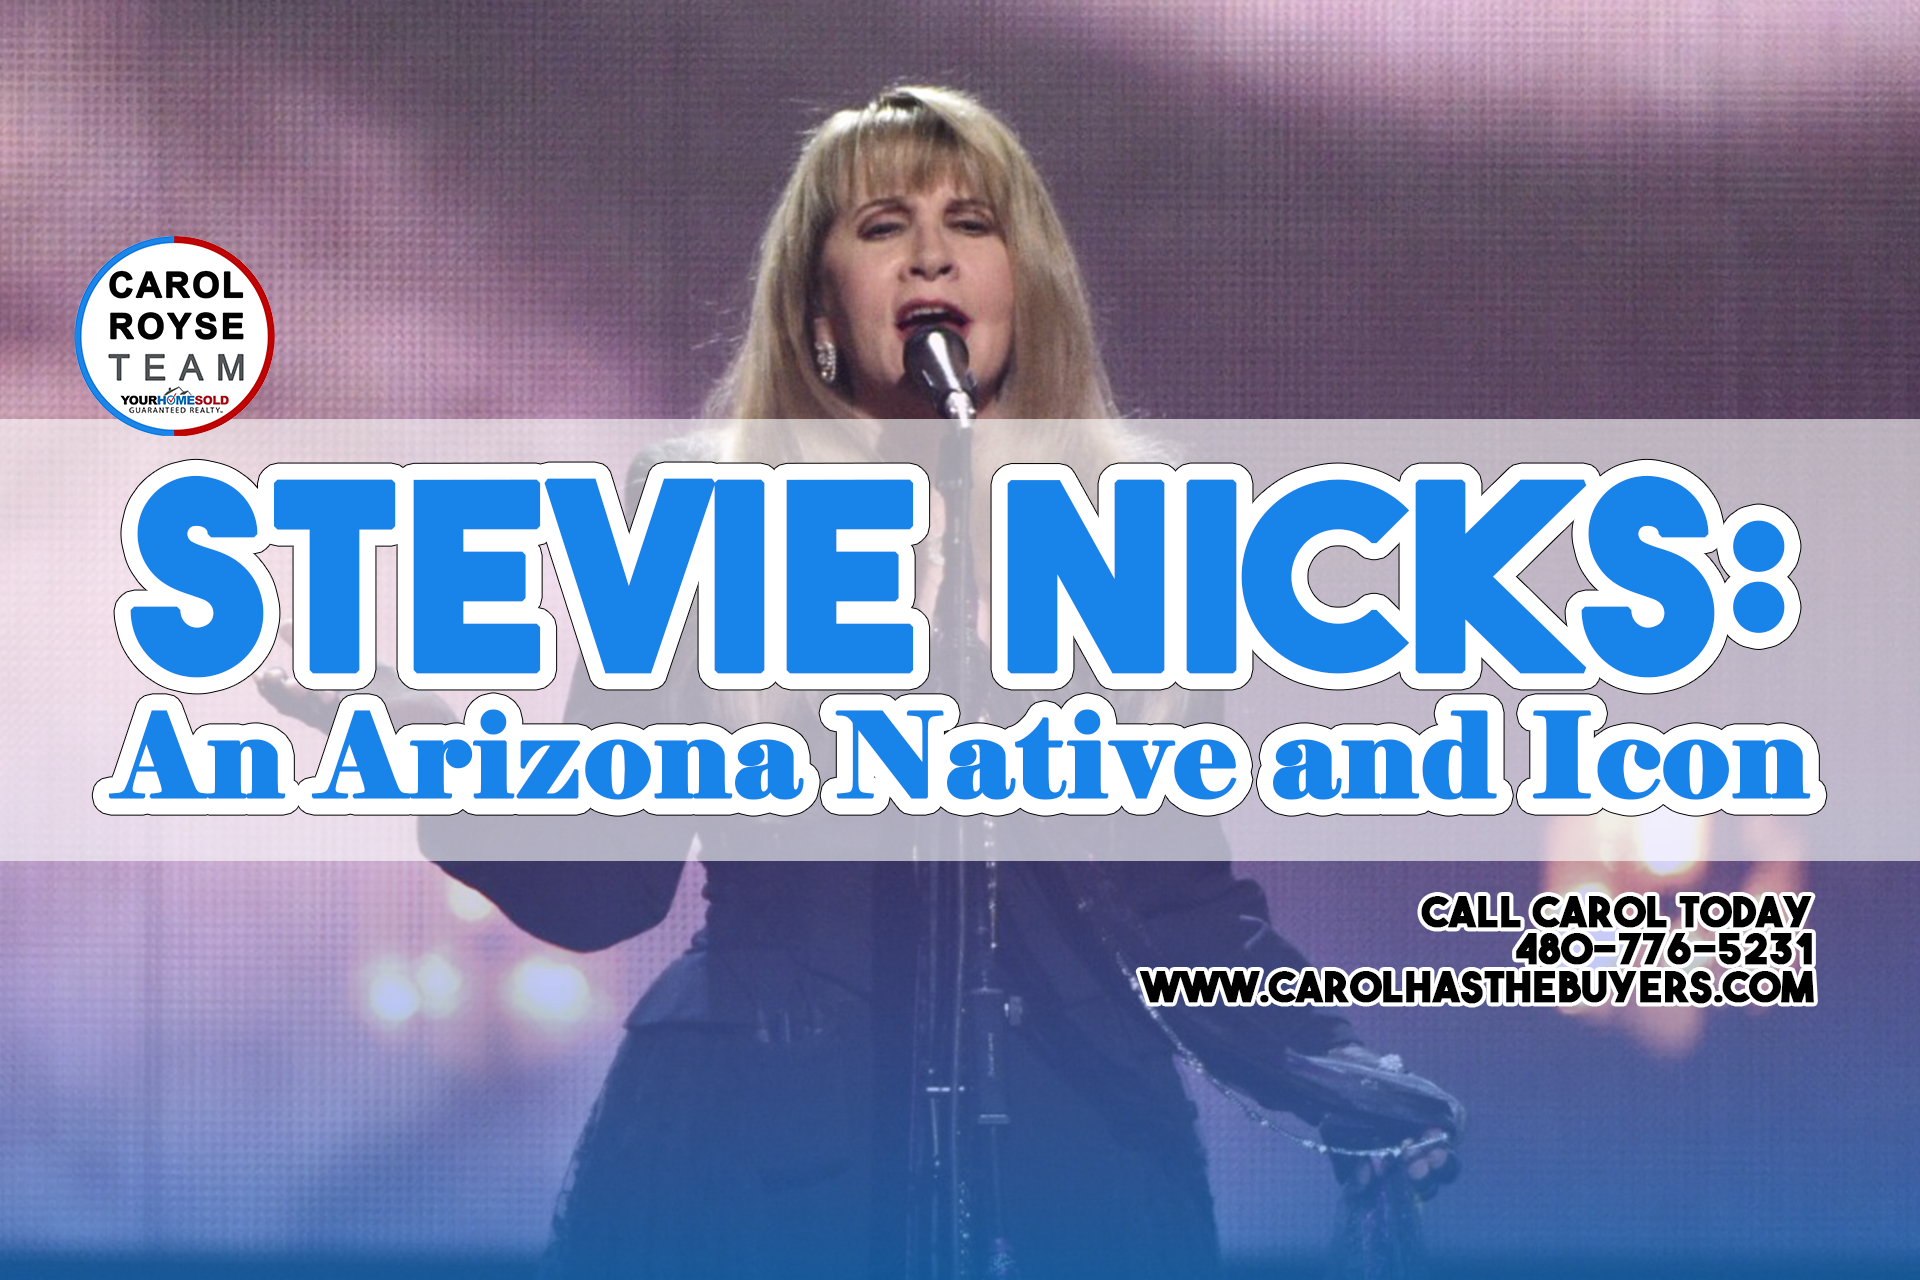 Stevie Nicks: An Arizona Native and Icon